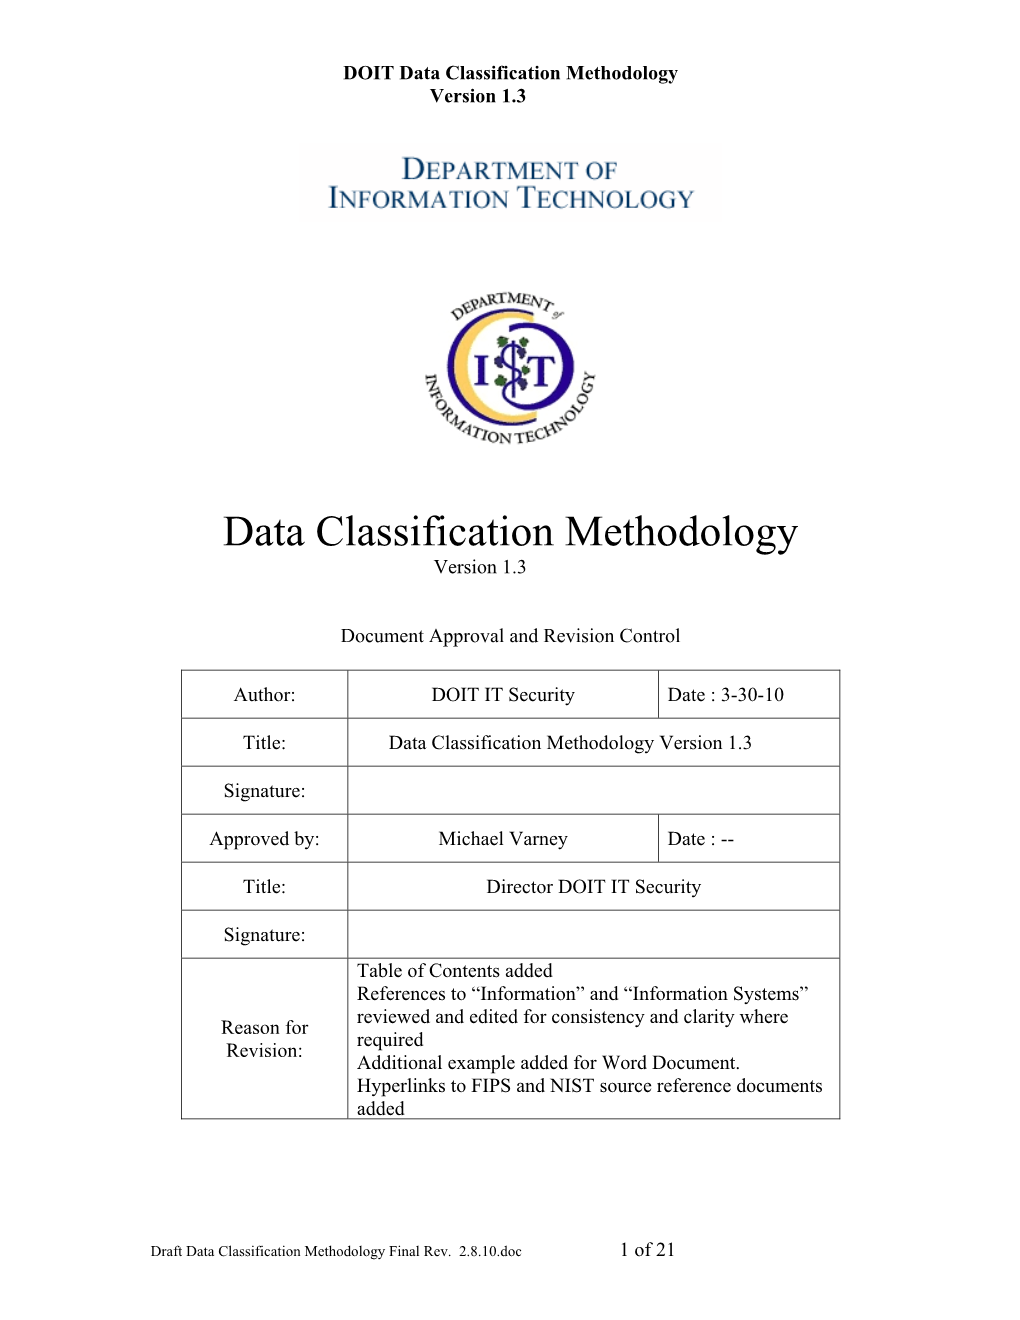 Data Classification Methodology Version 1.3